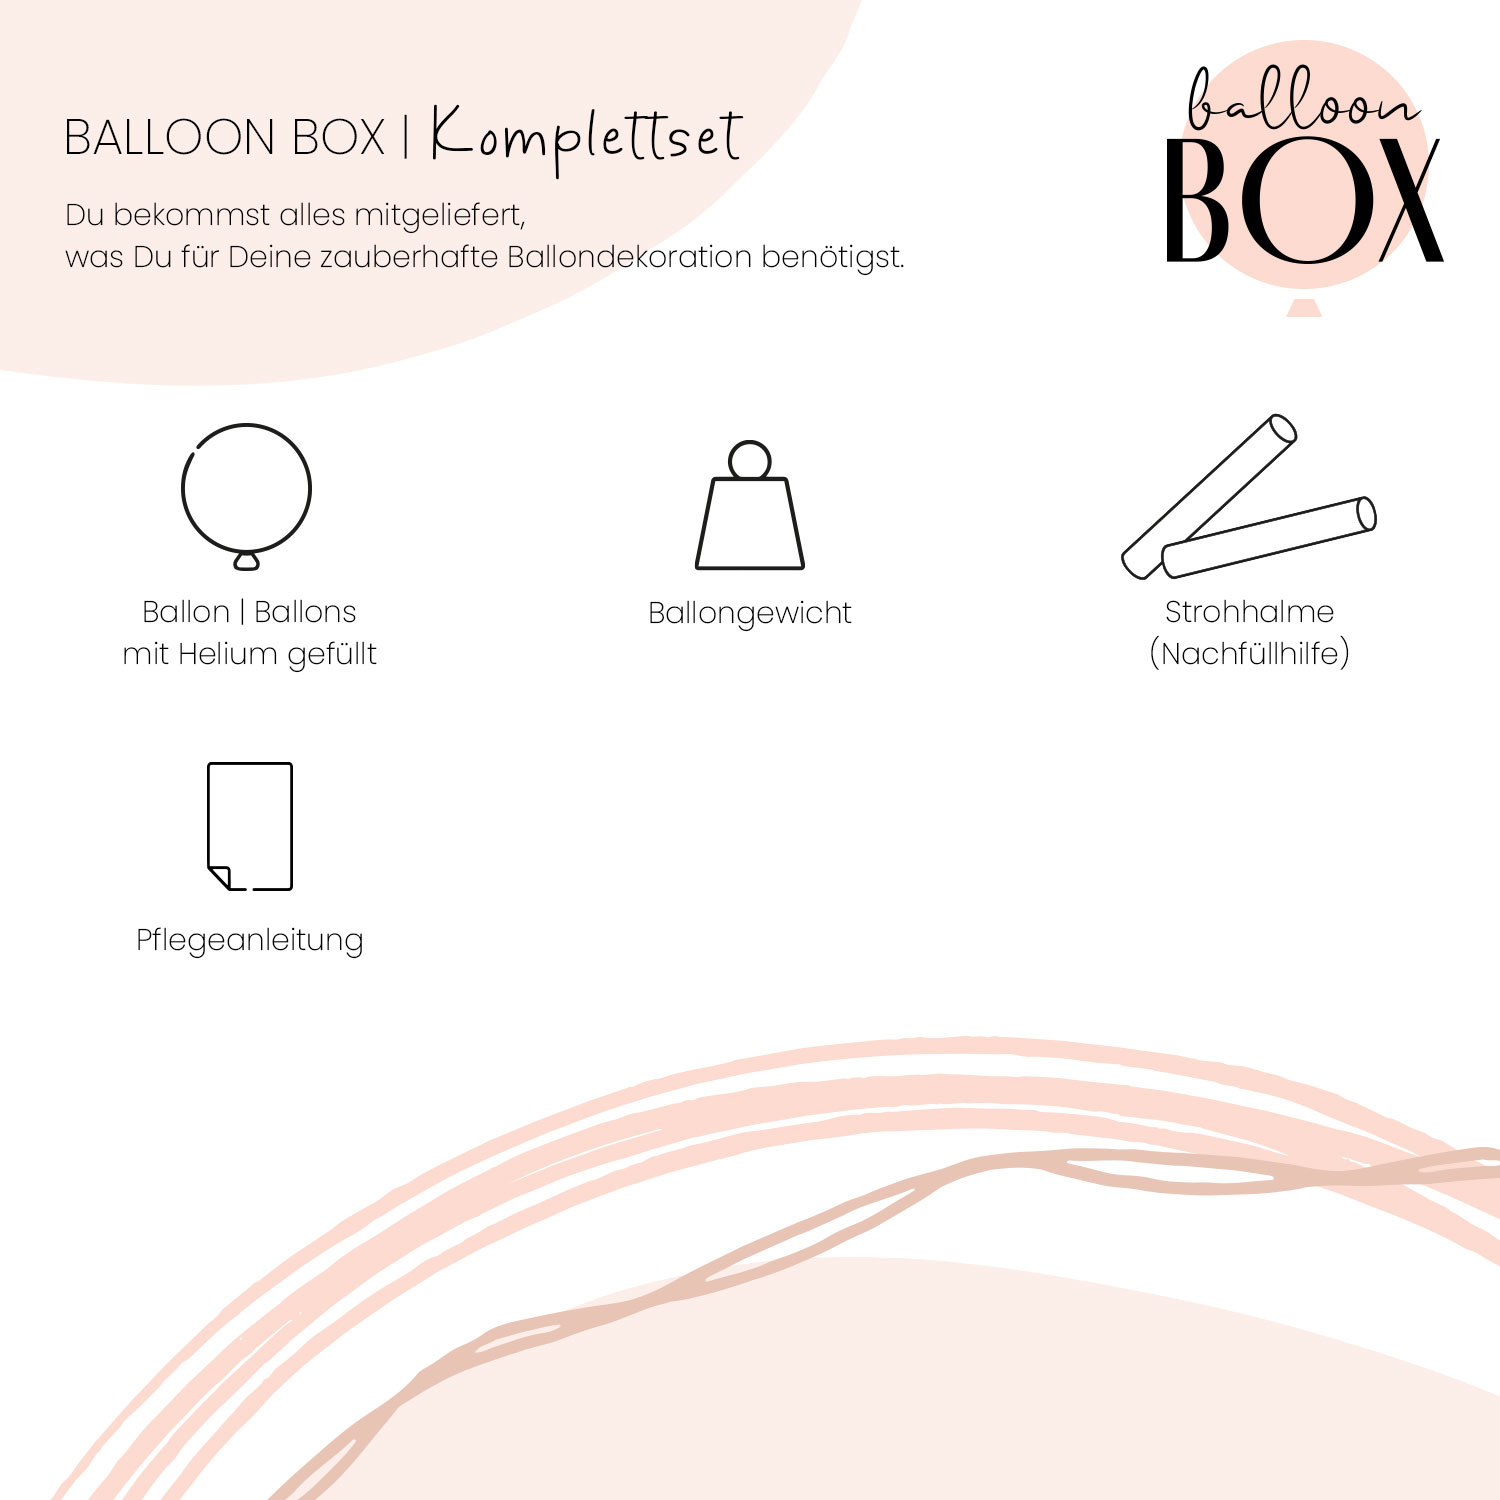 Heliumballon in a Box - Wild Birthday